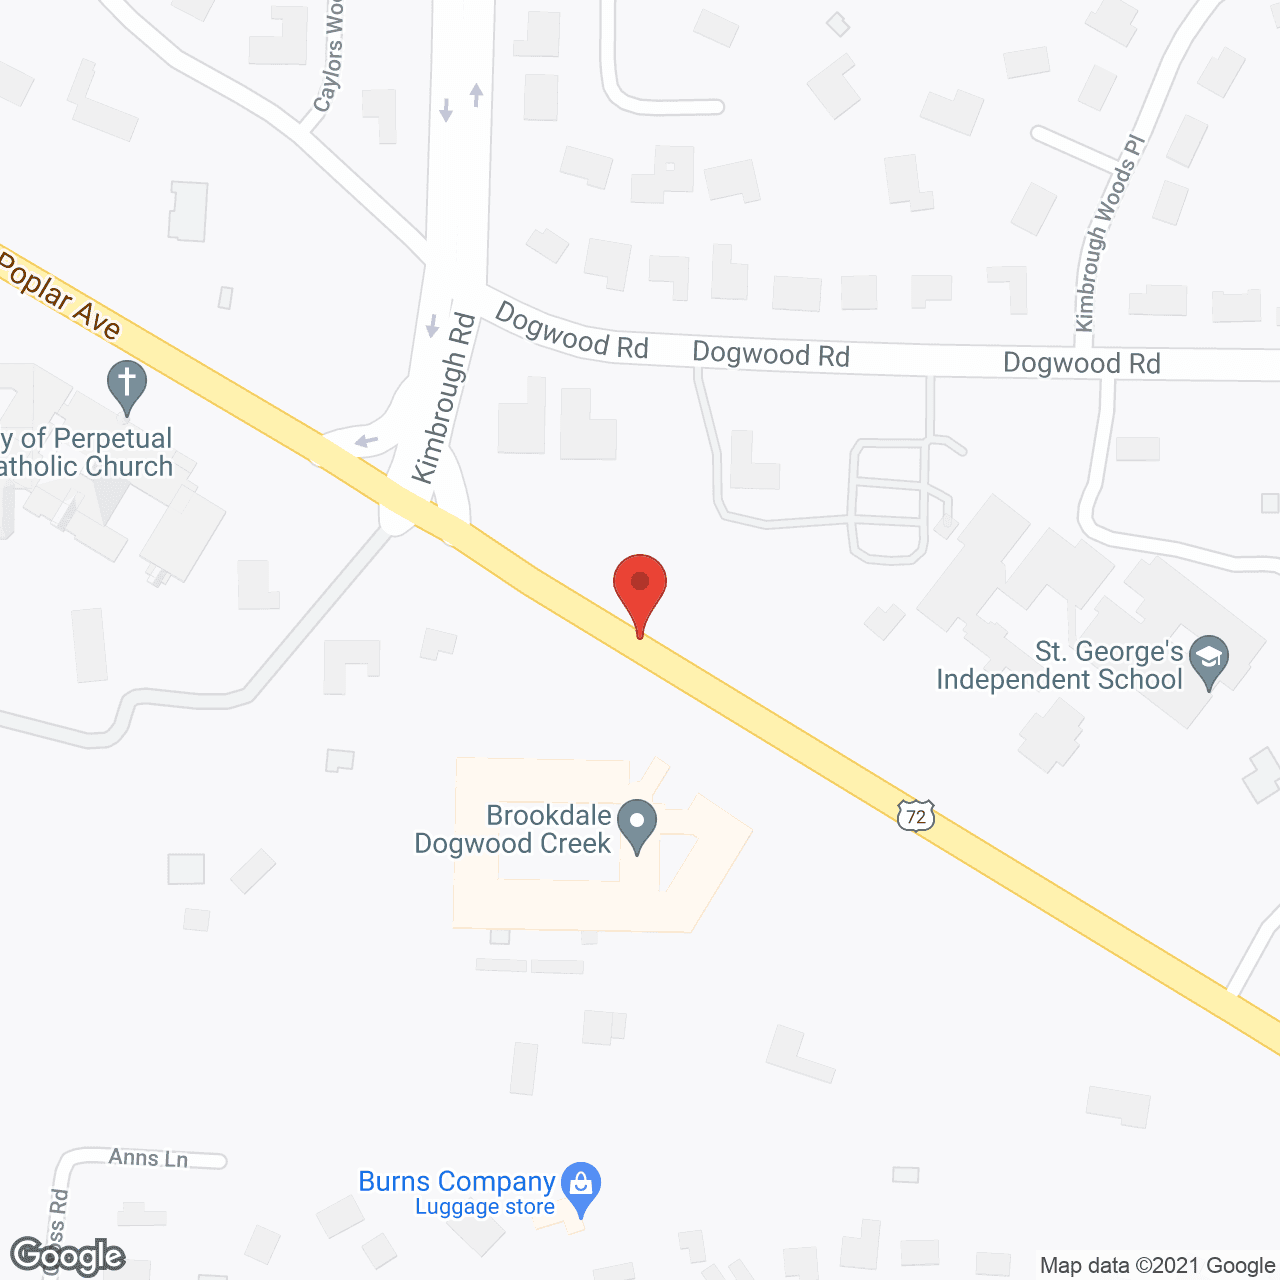 Brookdale Dogwood Creek in google map